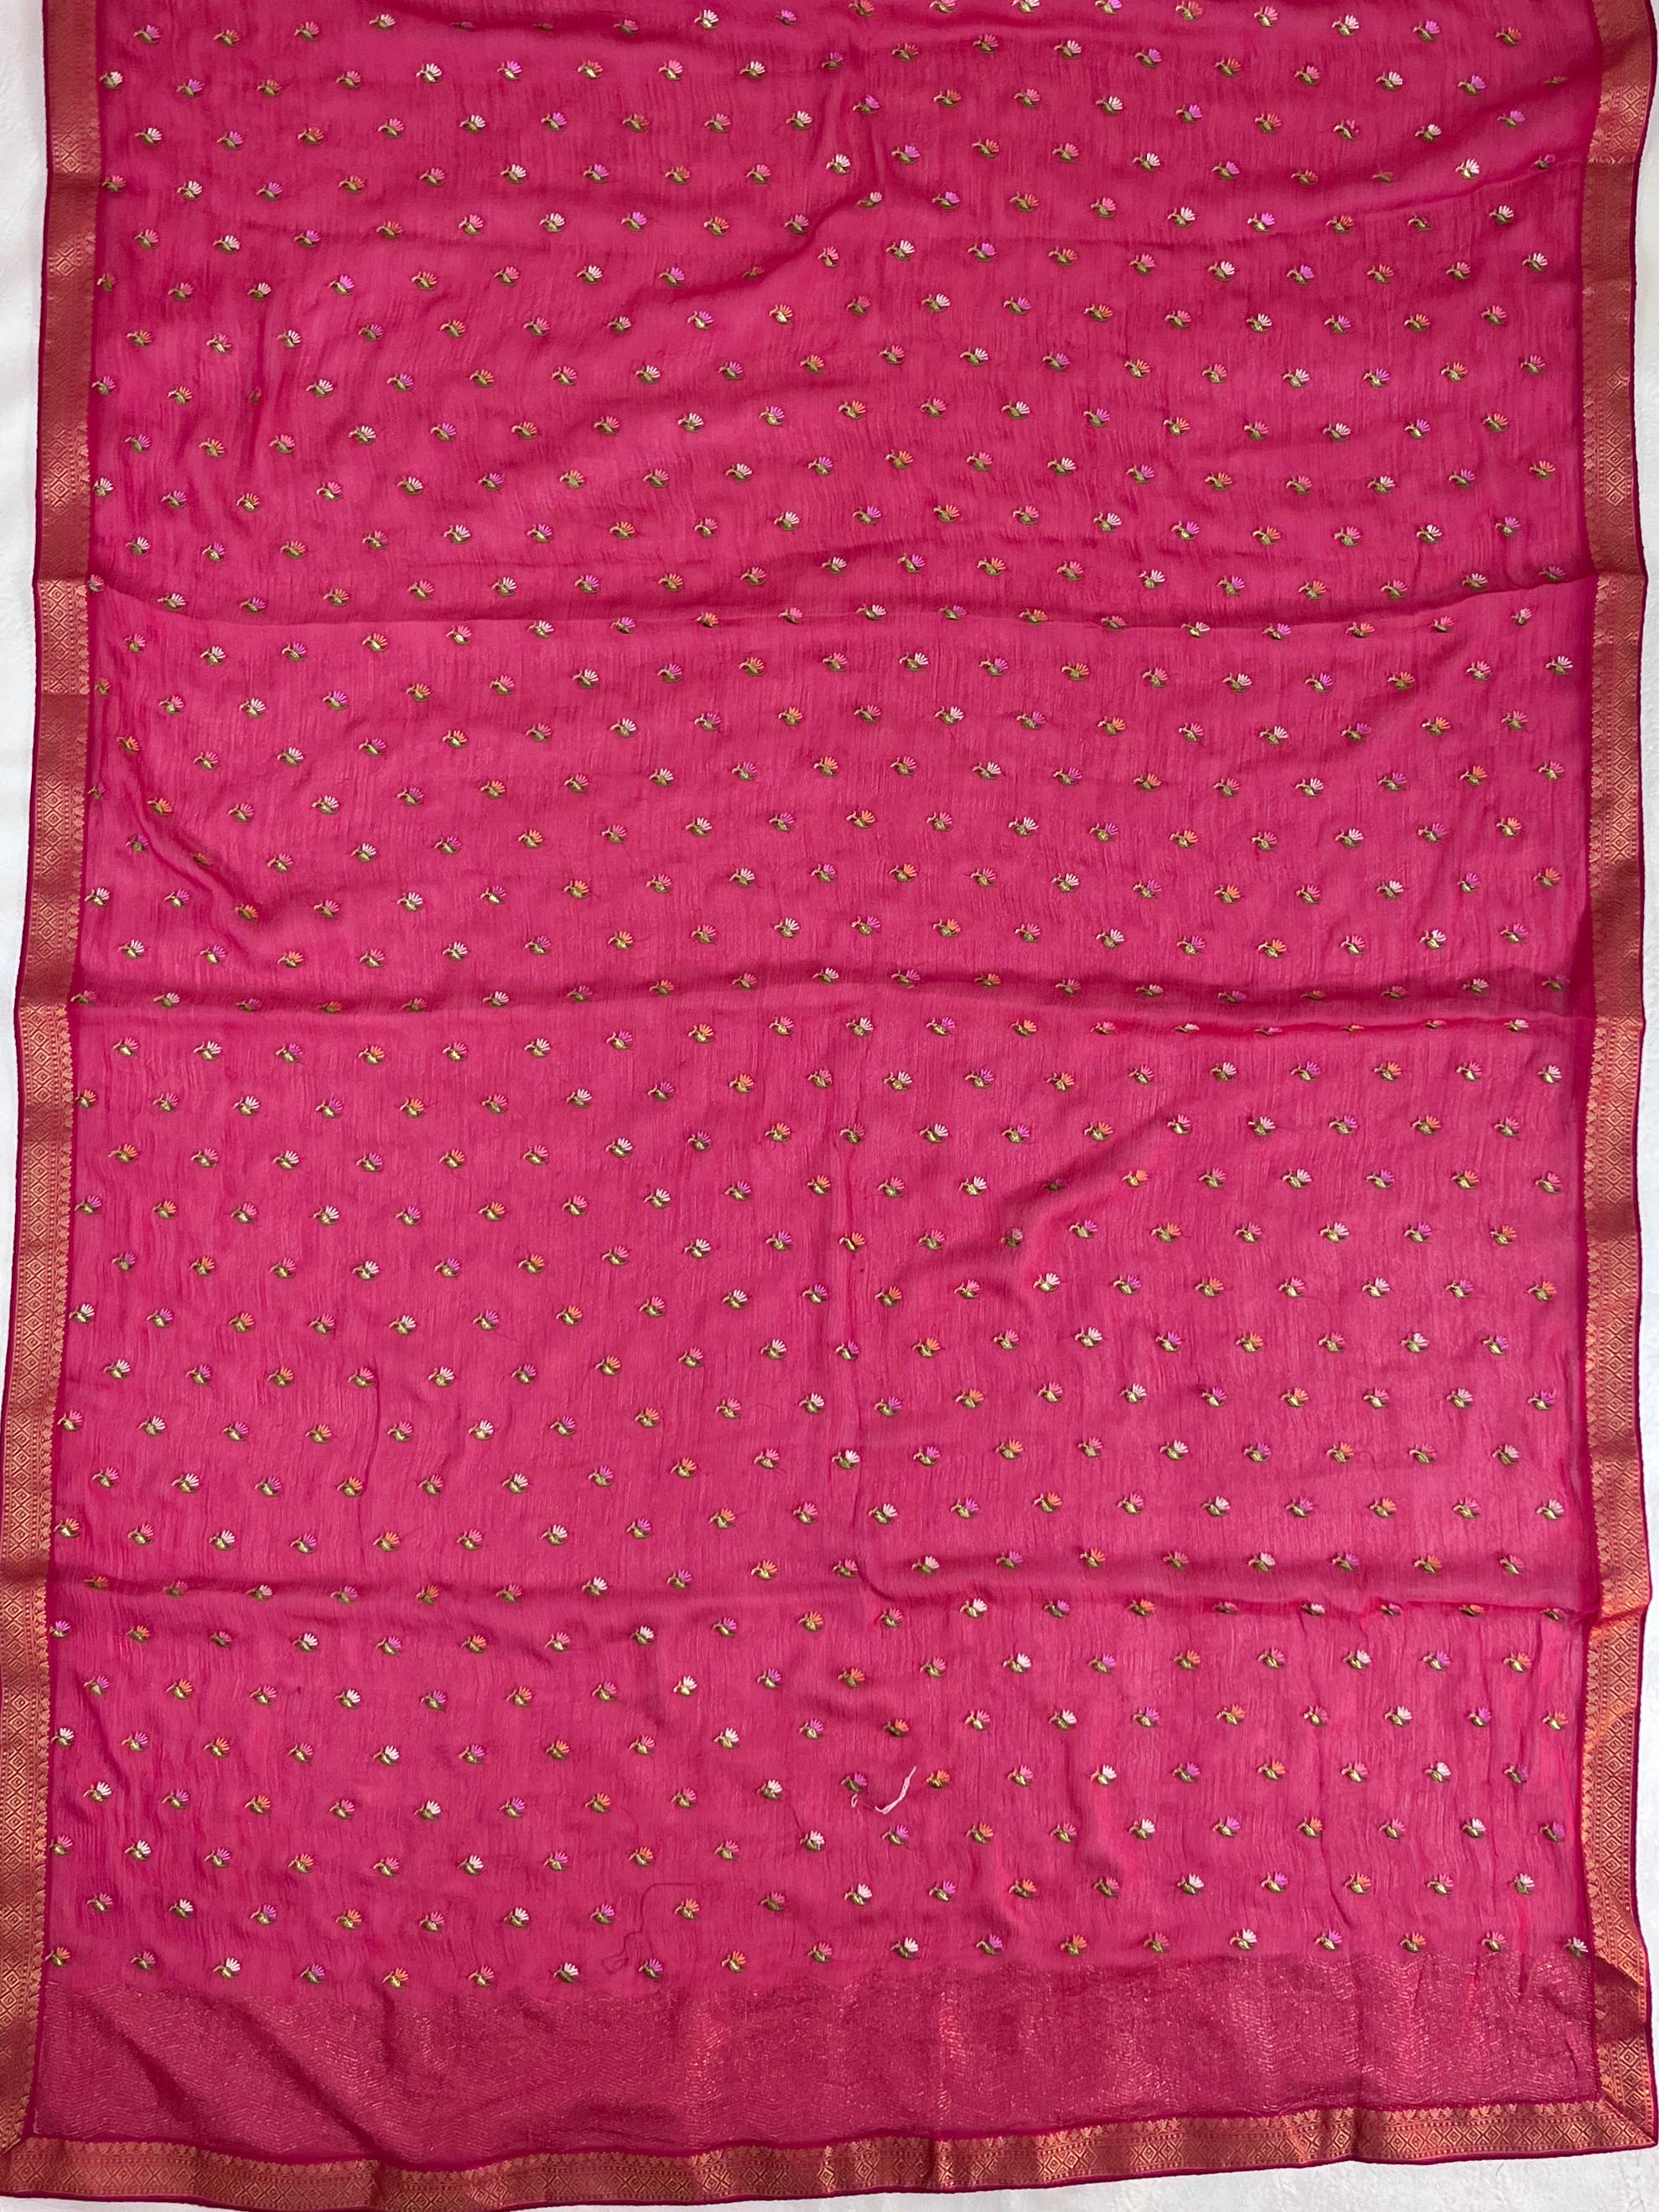 Banarasee Pure Chiffon Saree With Embroidery Work & Thin Banarasee Border-Fuchsia Pink